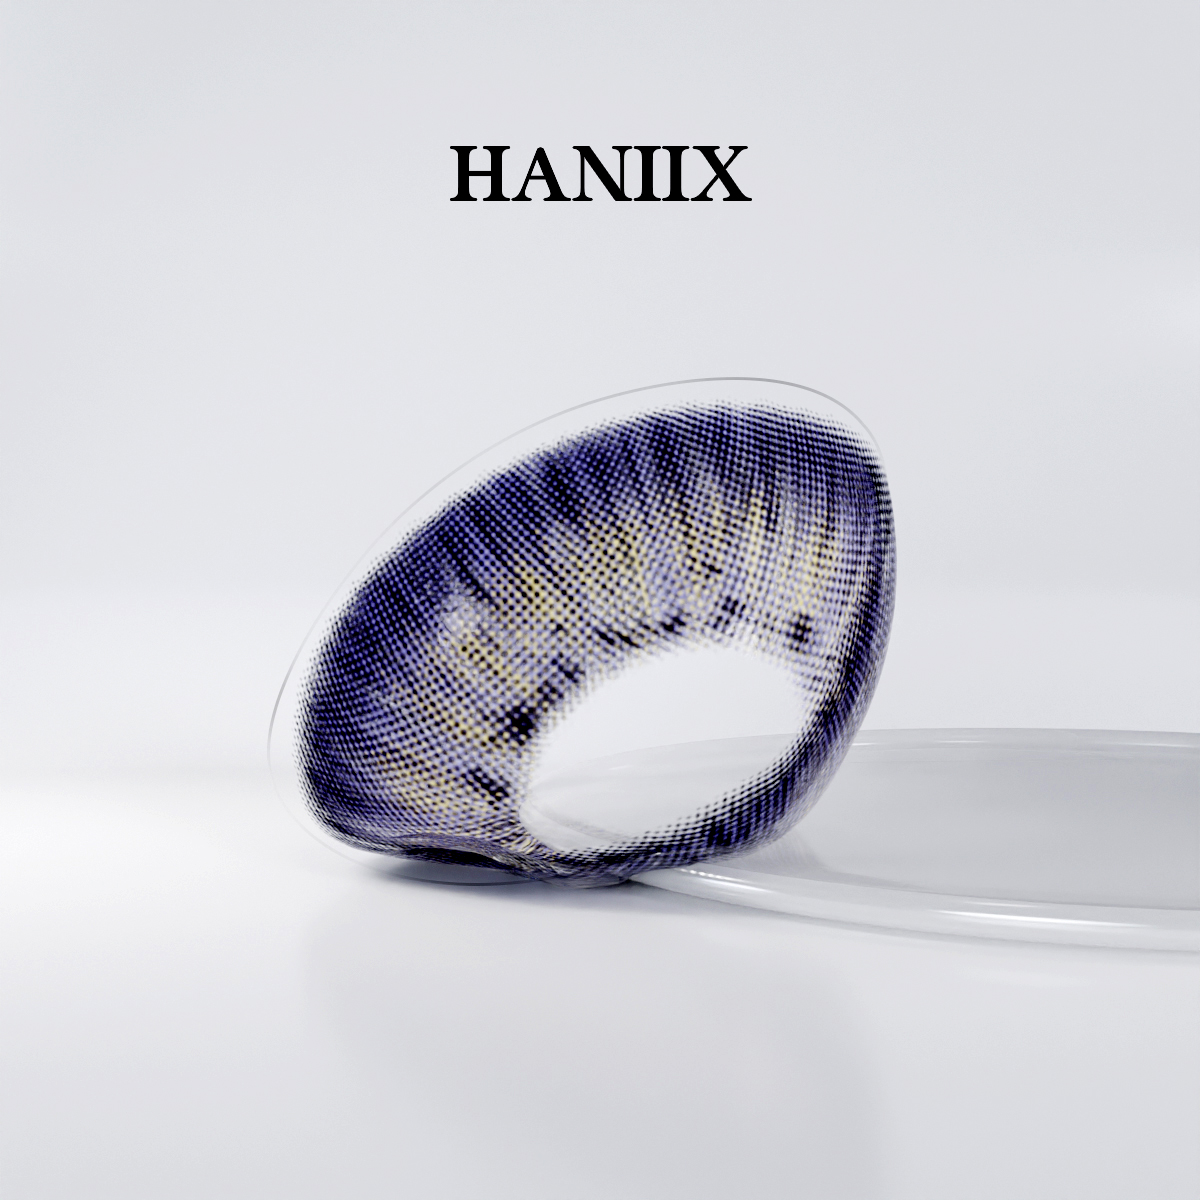 Iceland Violet - Yearly, 2 lenses - HANIIX